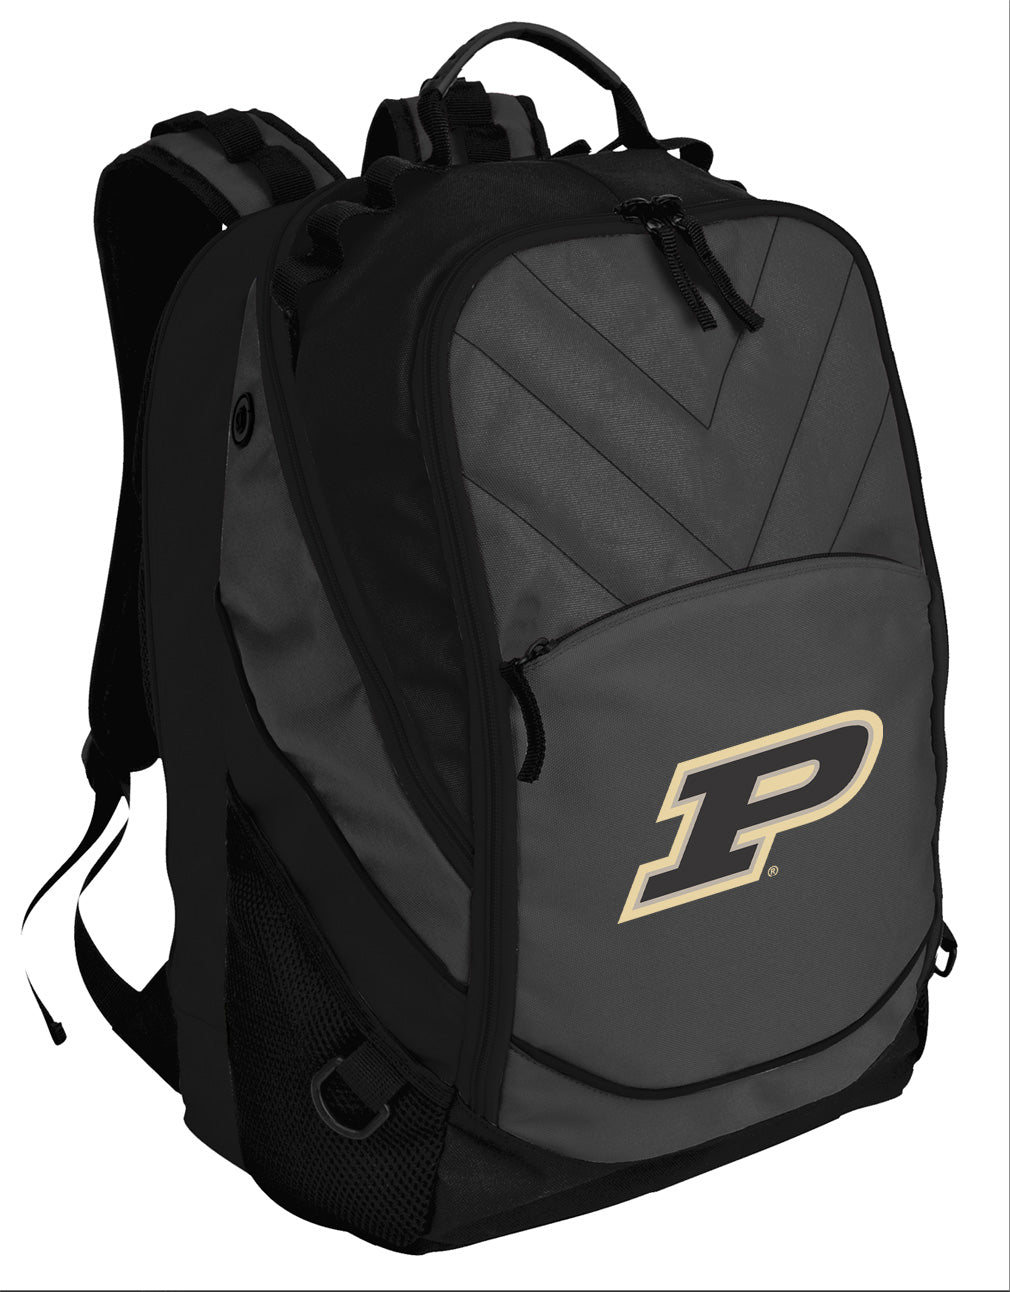 Purdue University Backpack Purdue Laptop Computer Backpack